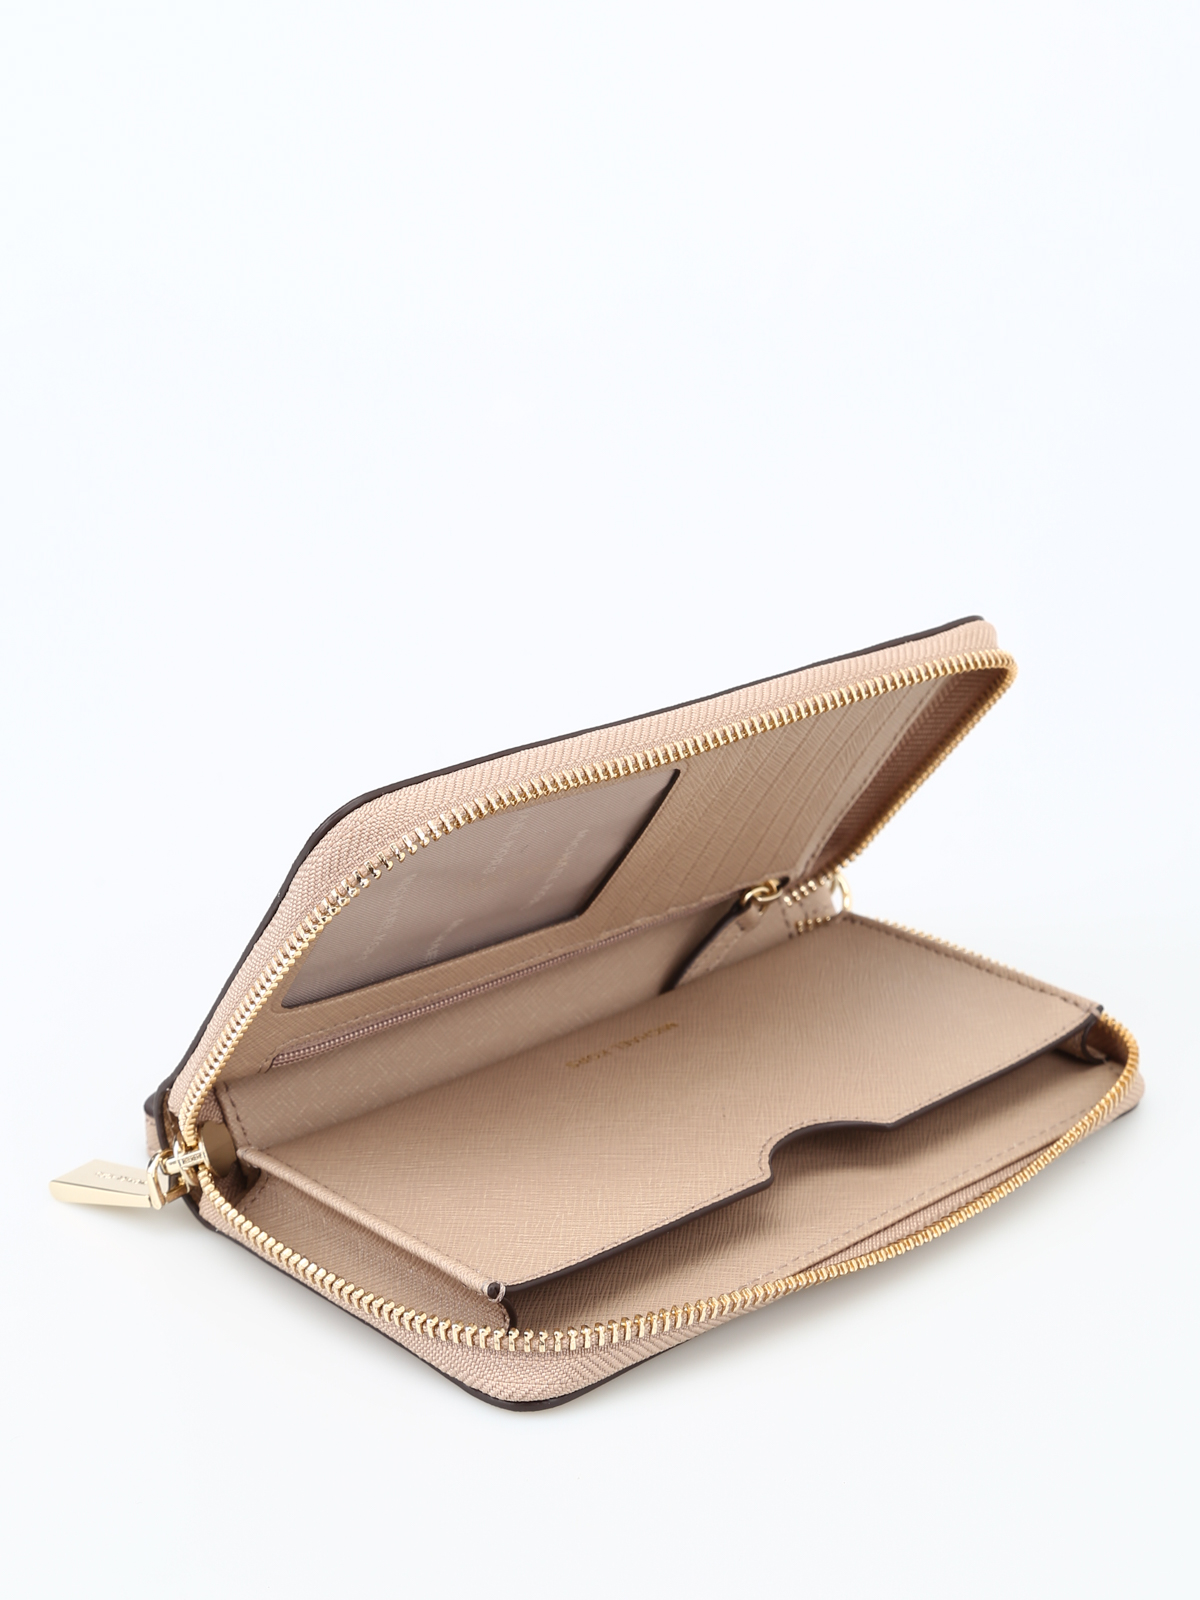 Gronden Ook regering Wallets & purses Michael Kors - Saffiano leather smartphone wallet -  32T8TFDE9L208